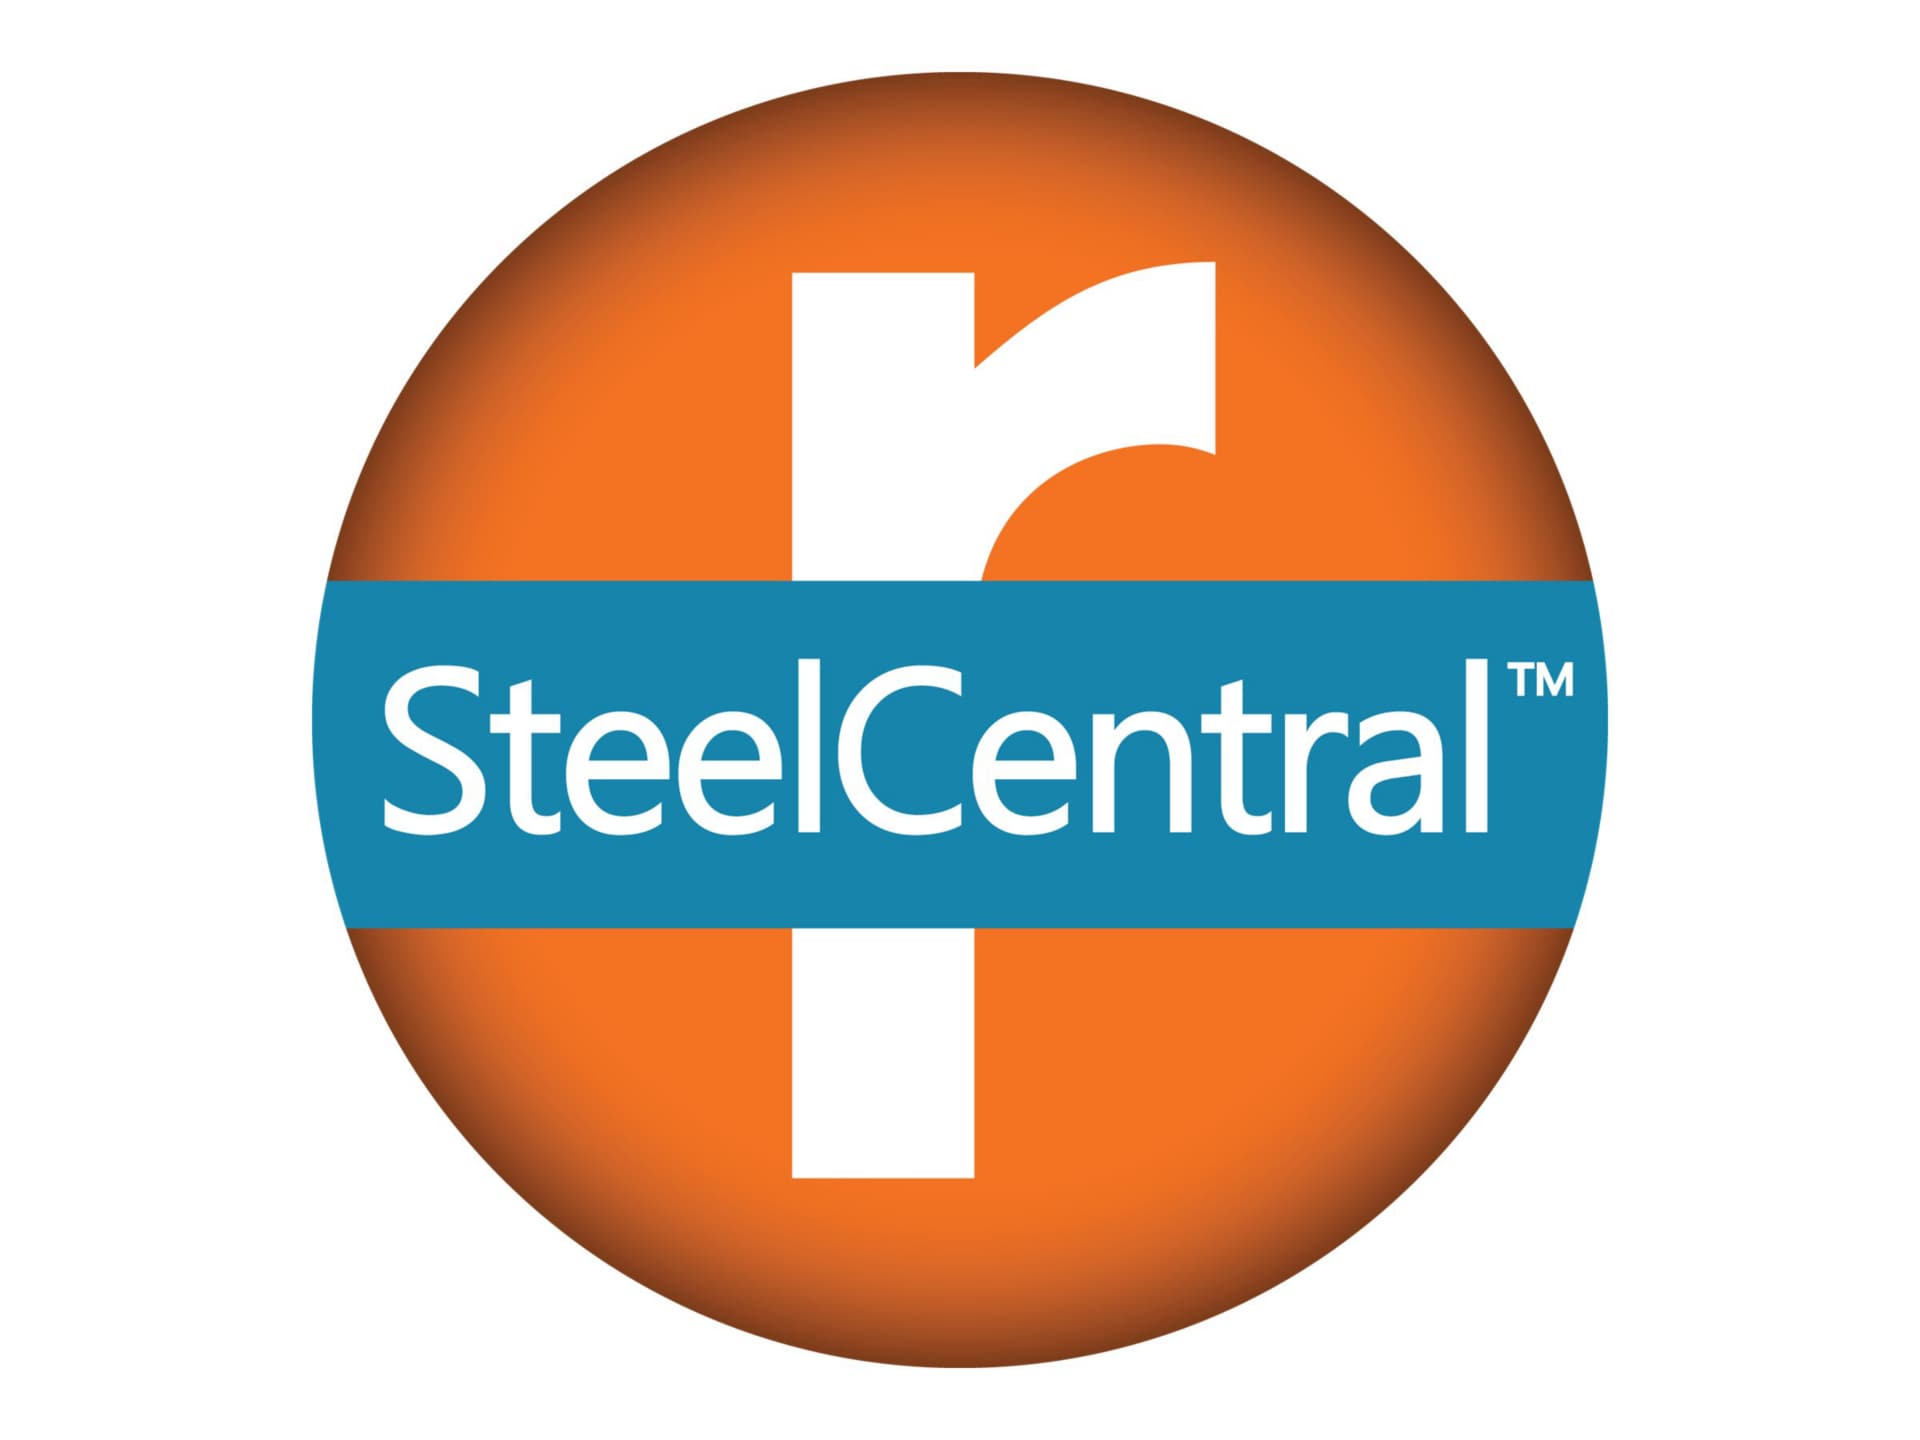 SteelCentral AppResponse Web Transaction Analysis Module (v. 11) - license